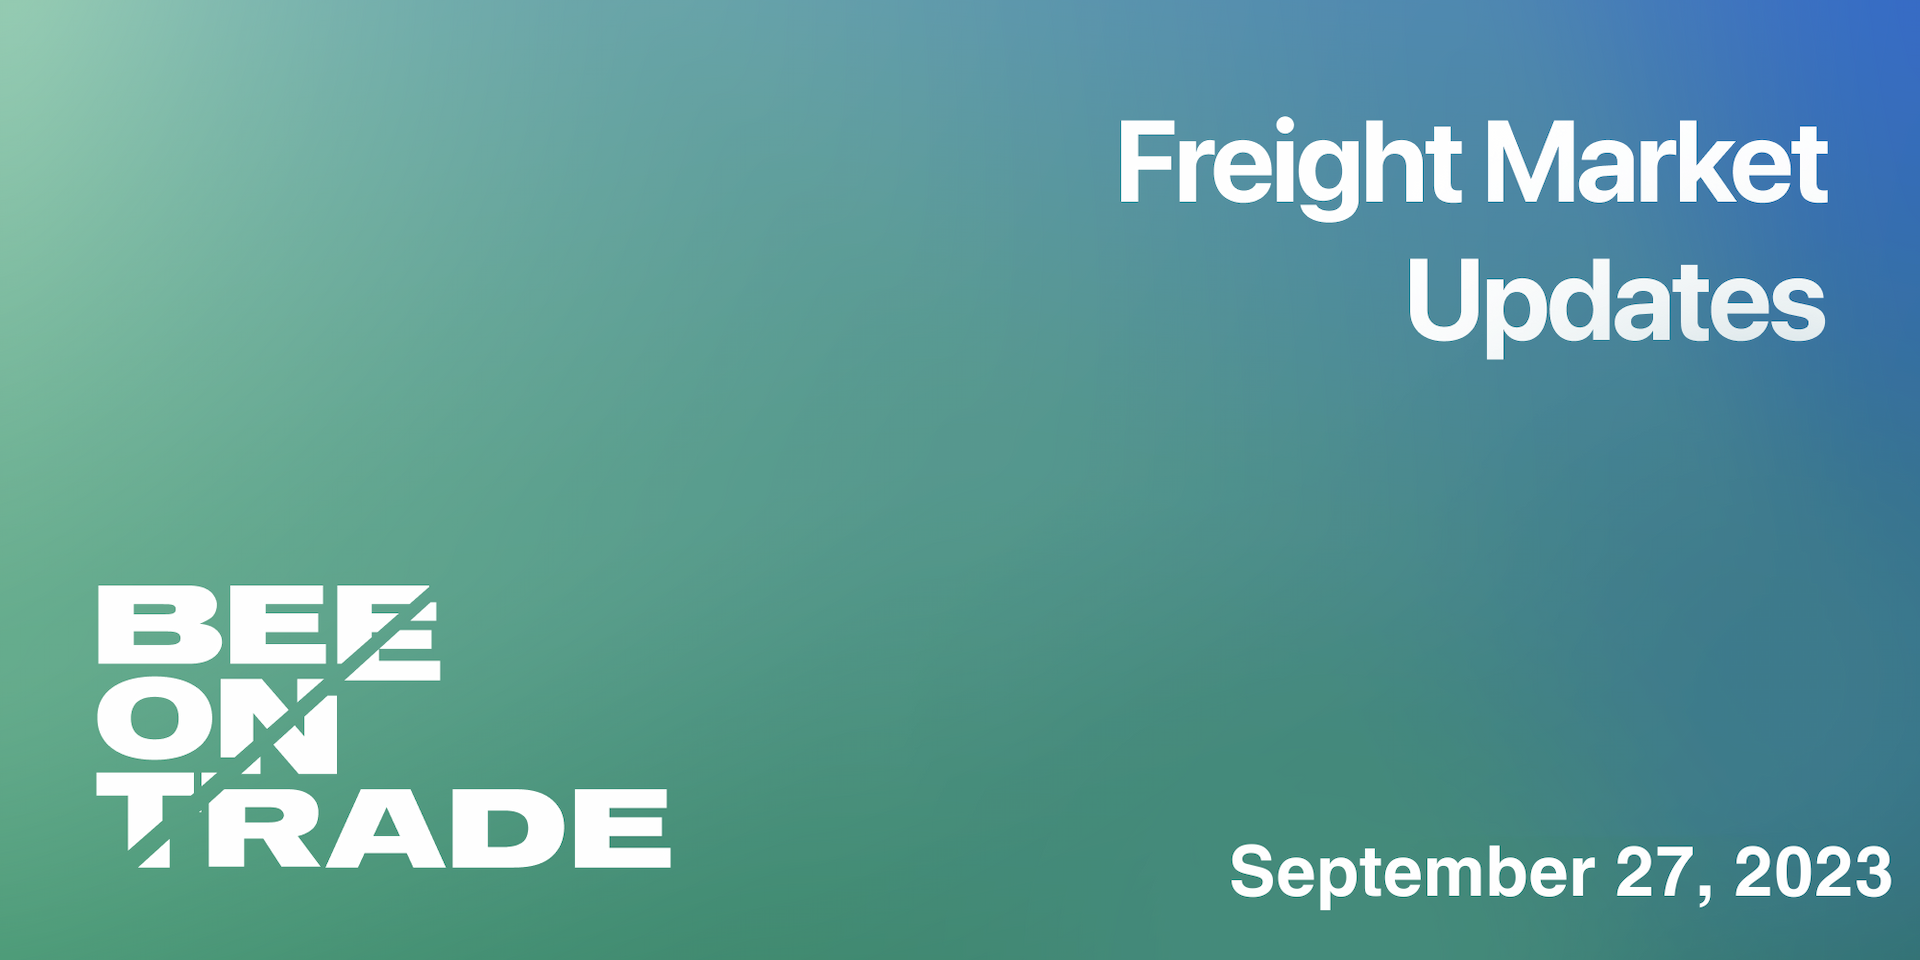 Freight market update - 27 September 2023